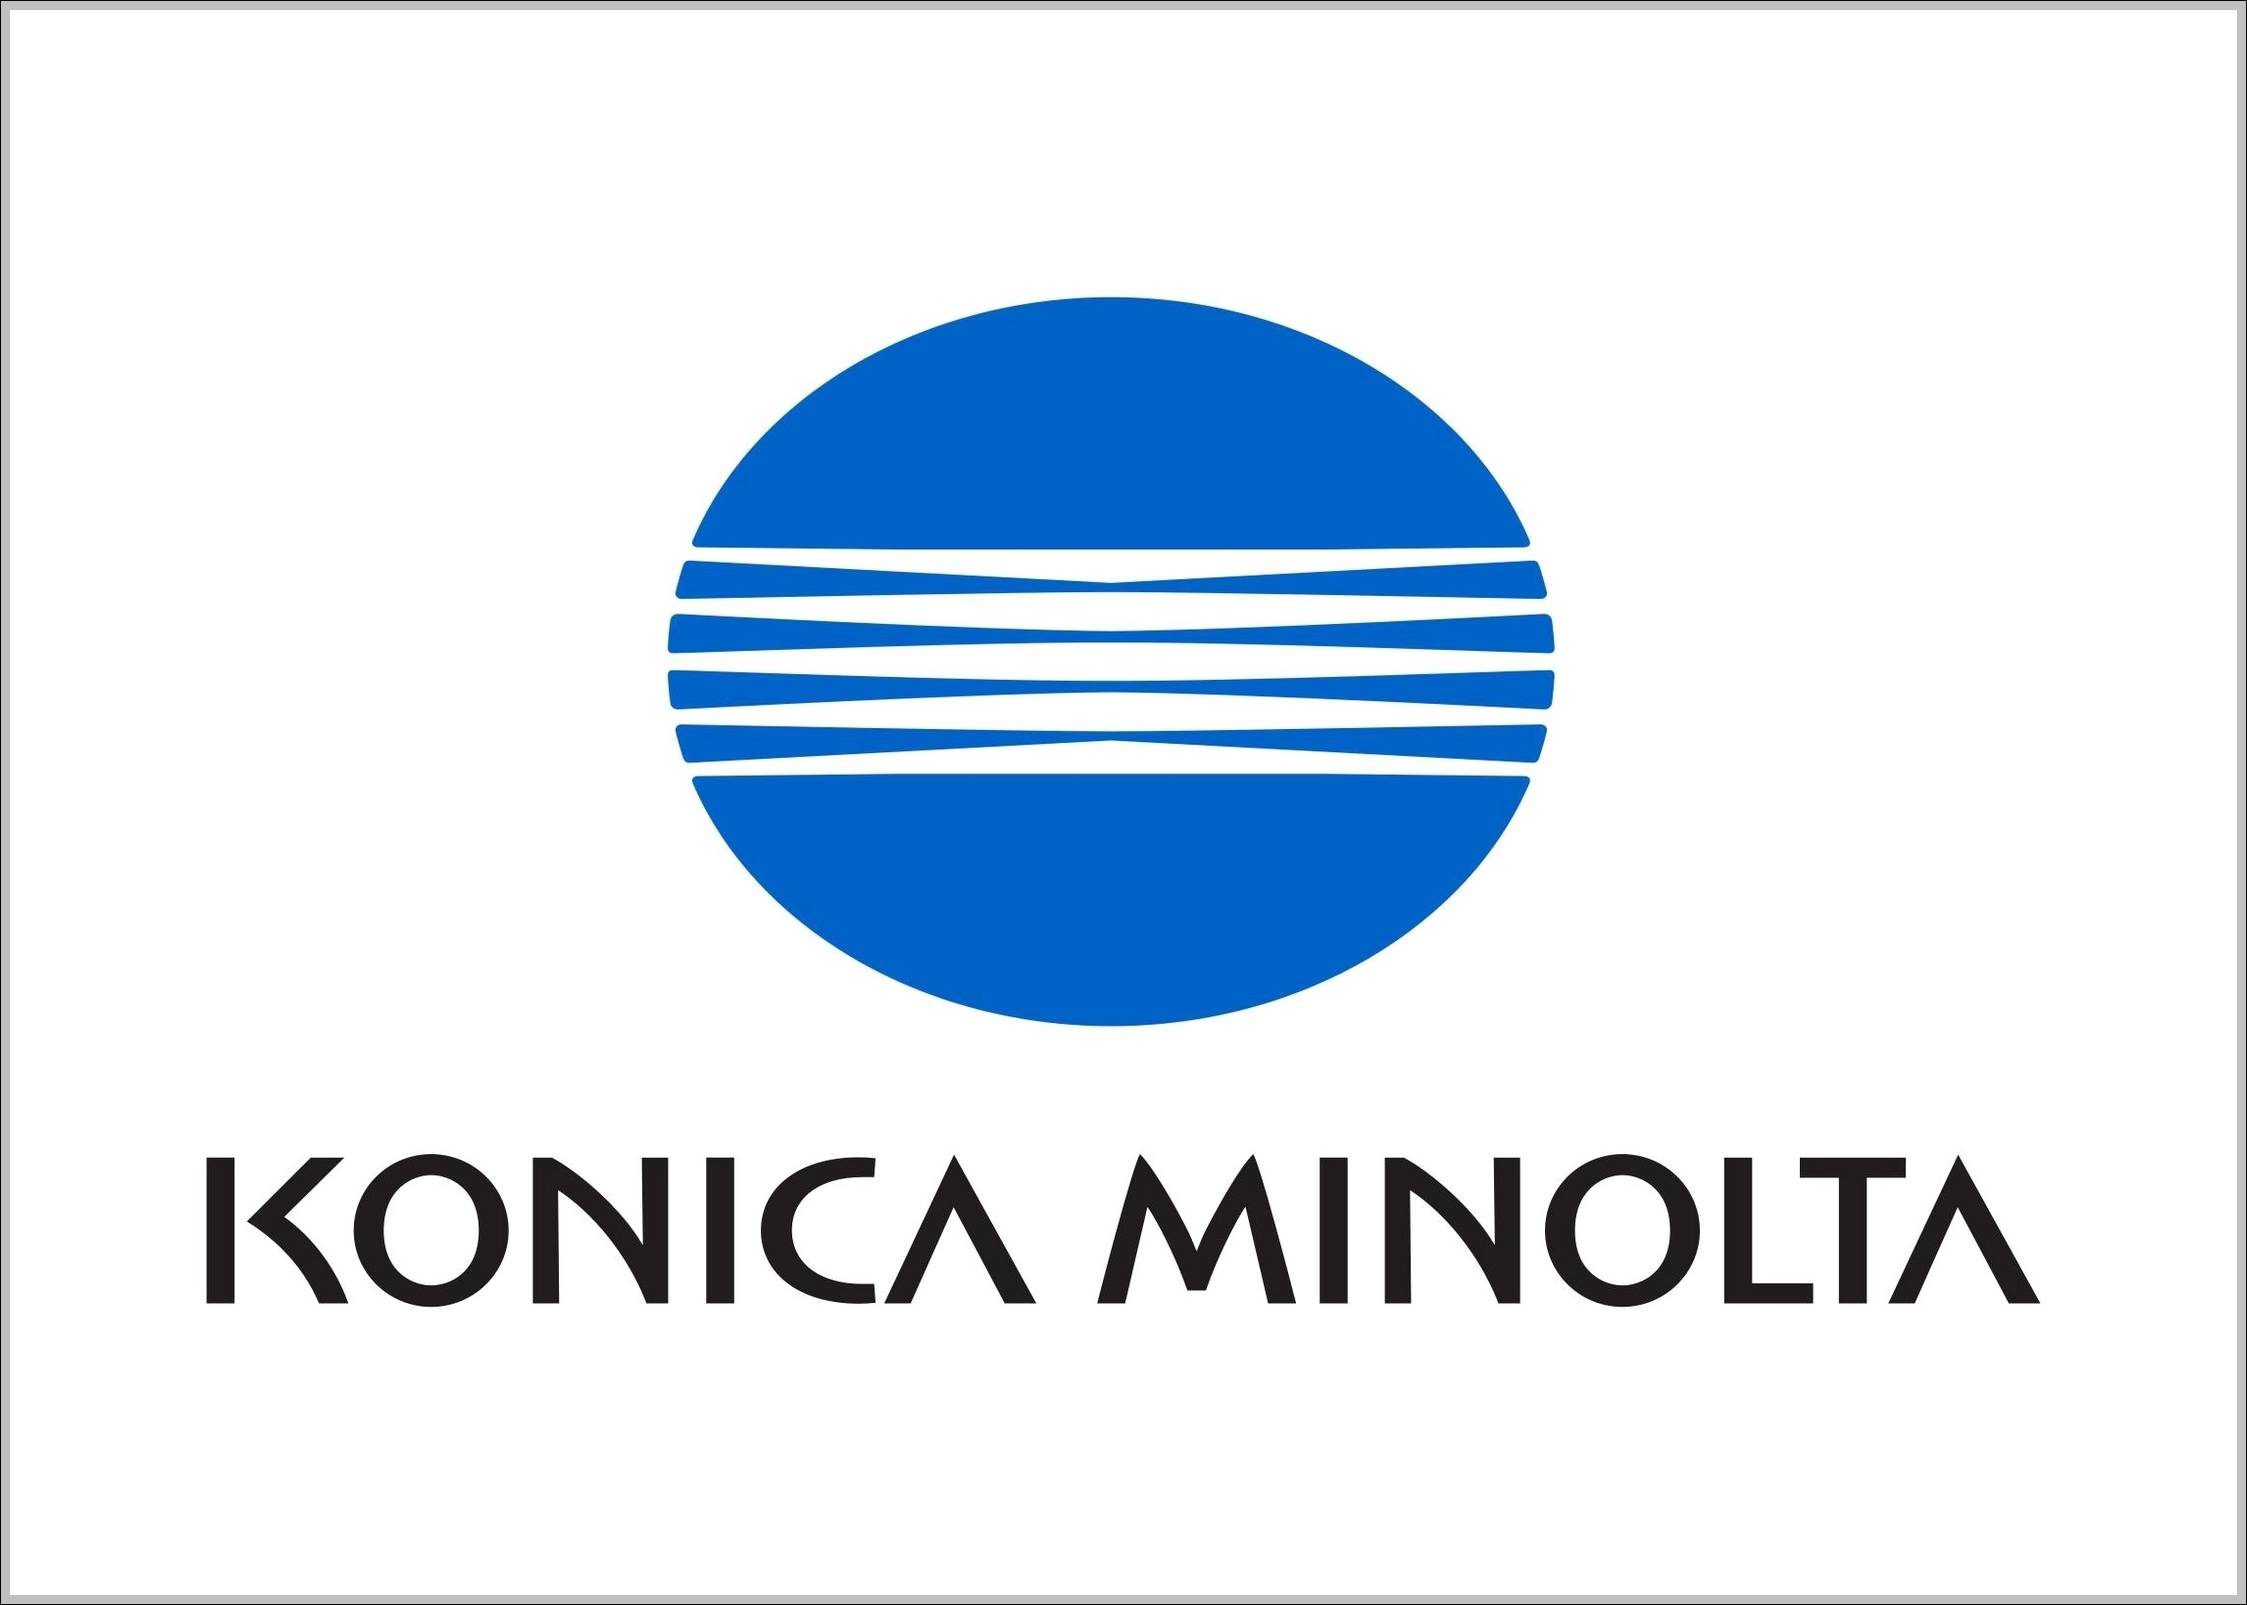 Konica Minolta logo plain